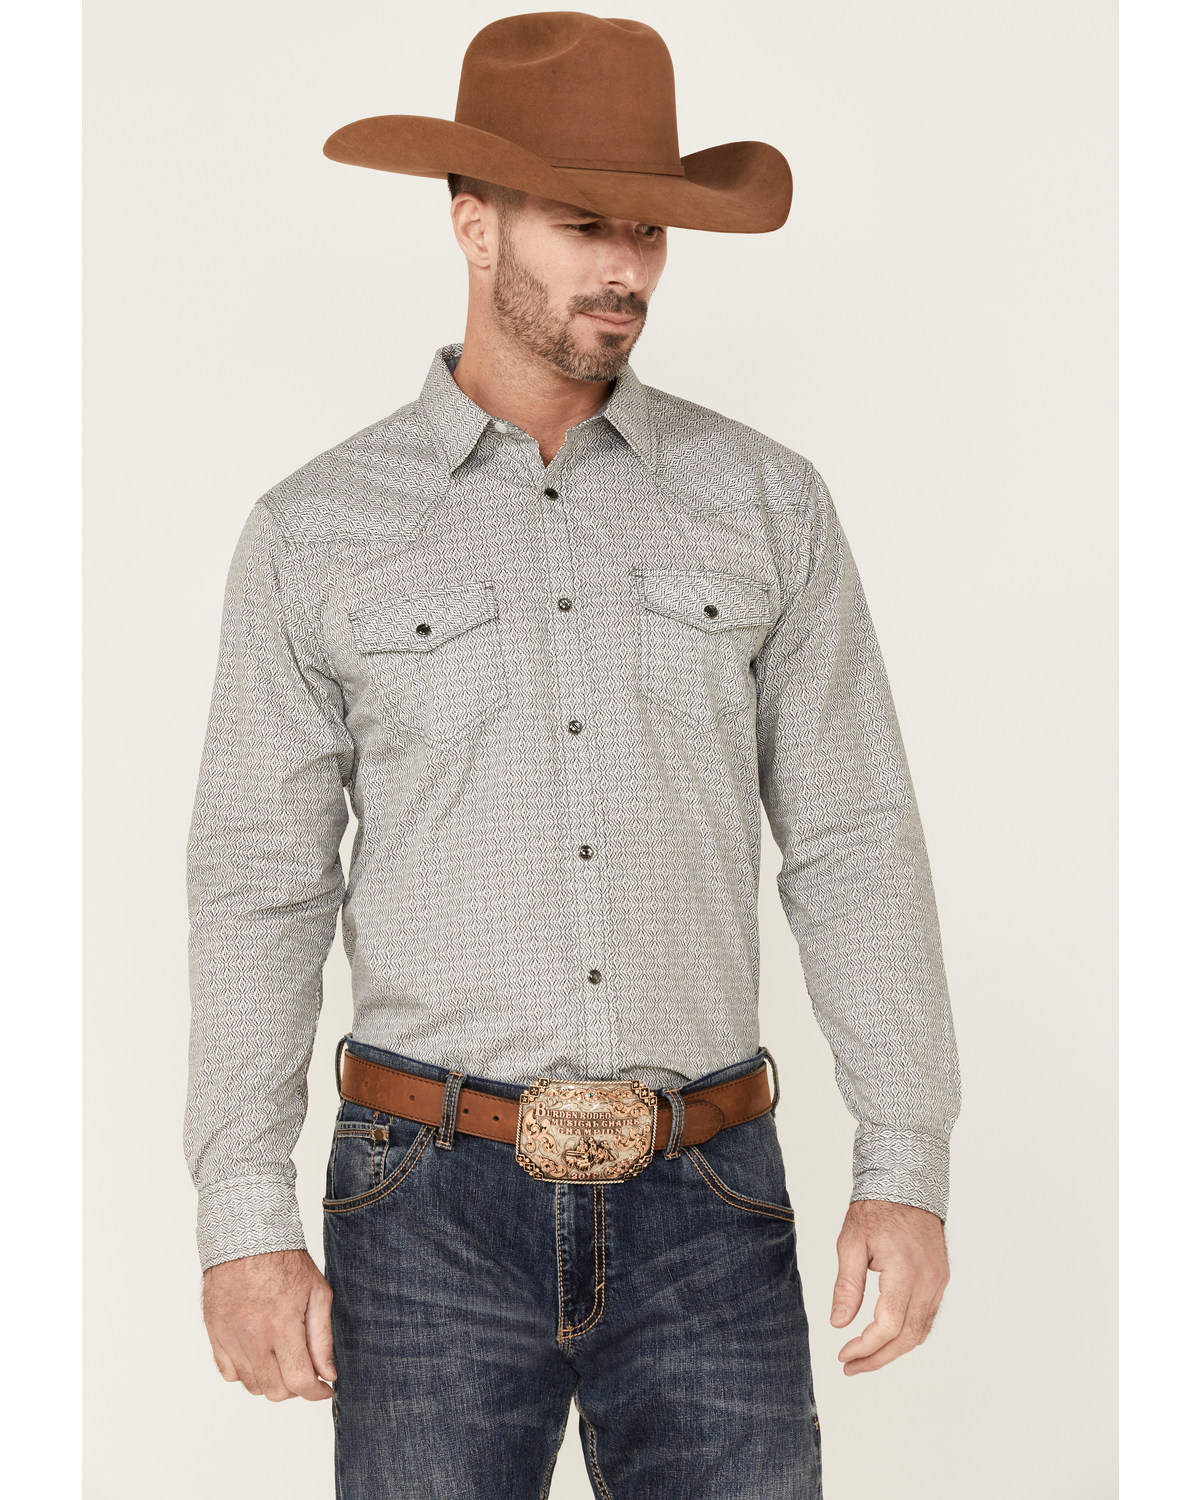 Cody James Men's Landmark Southwestern Print Long Sleeve Snap Western Shirt